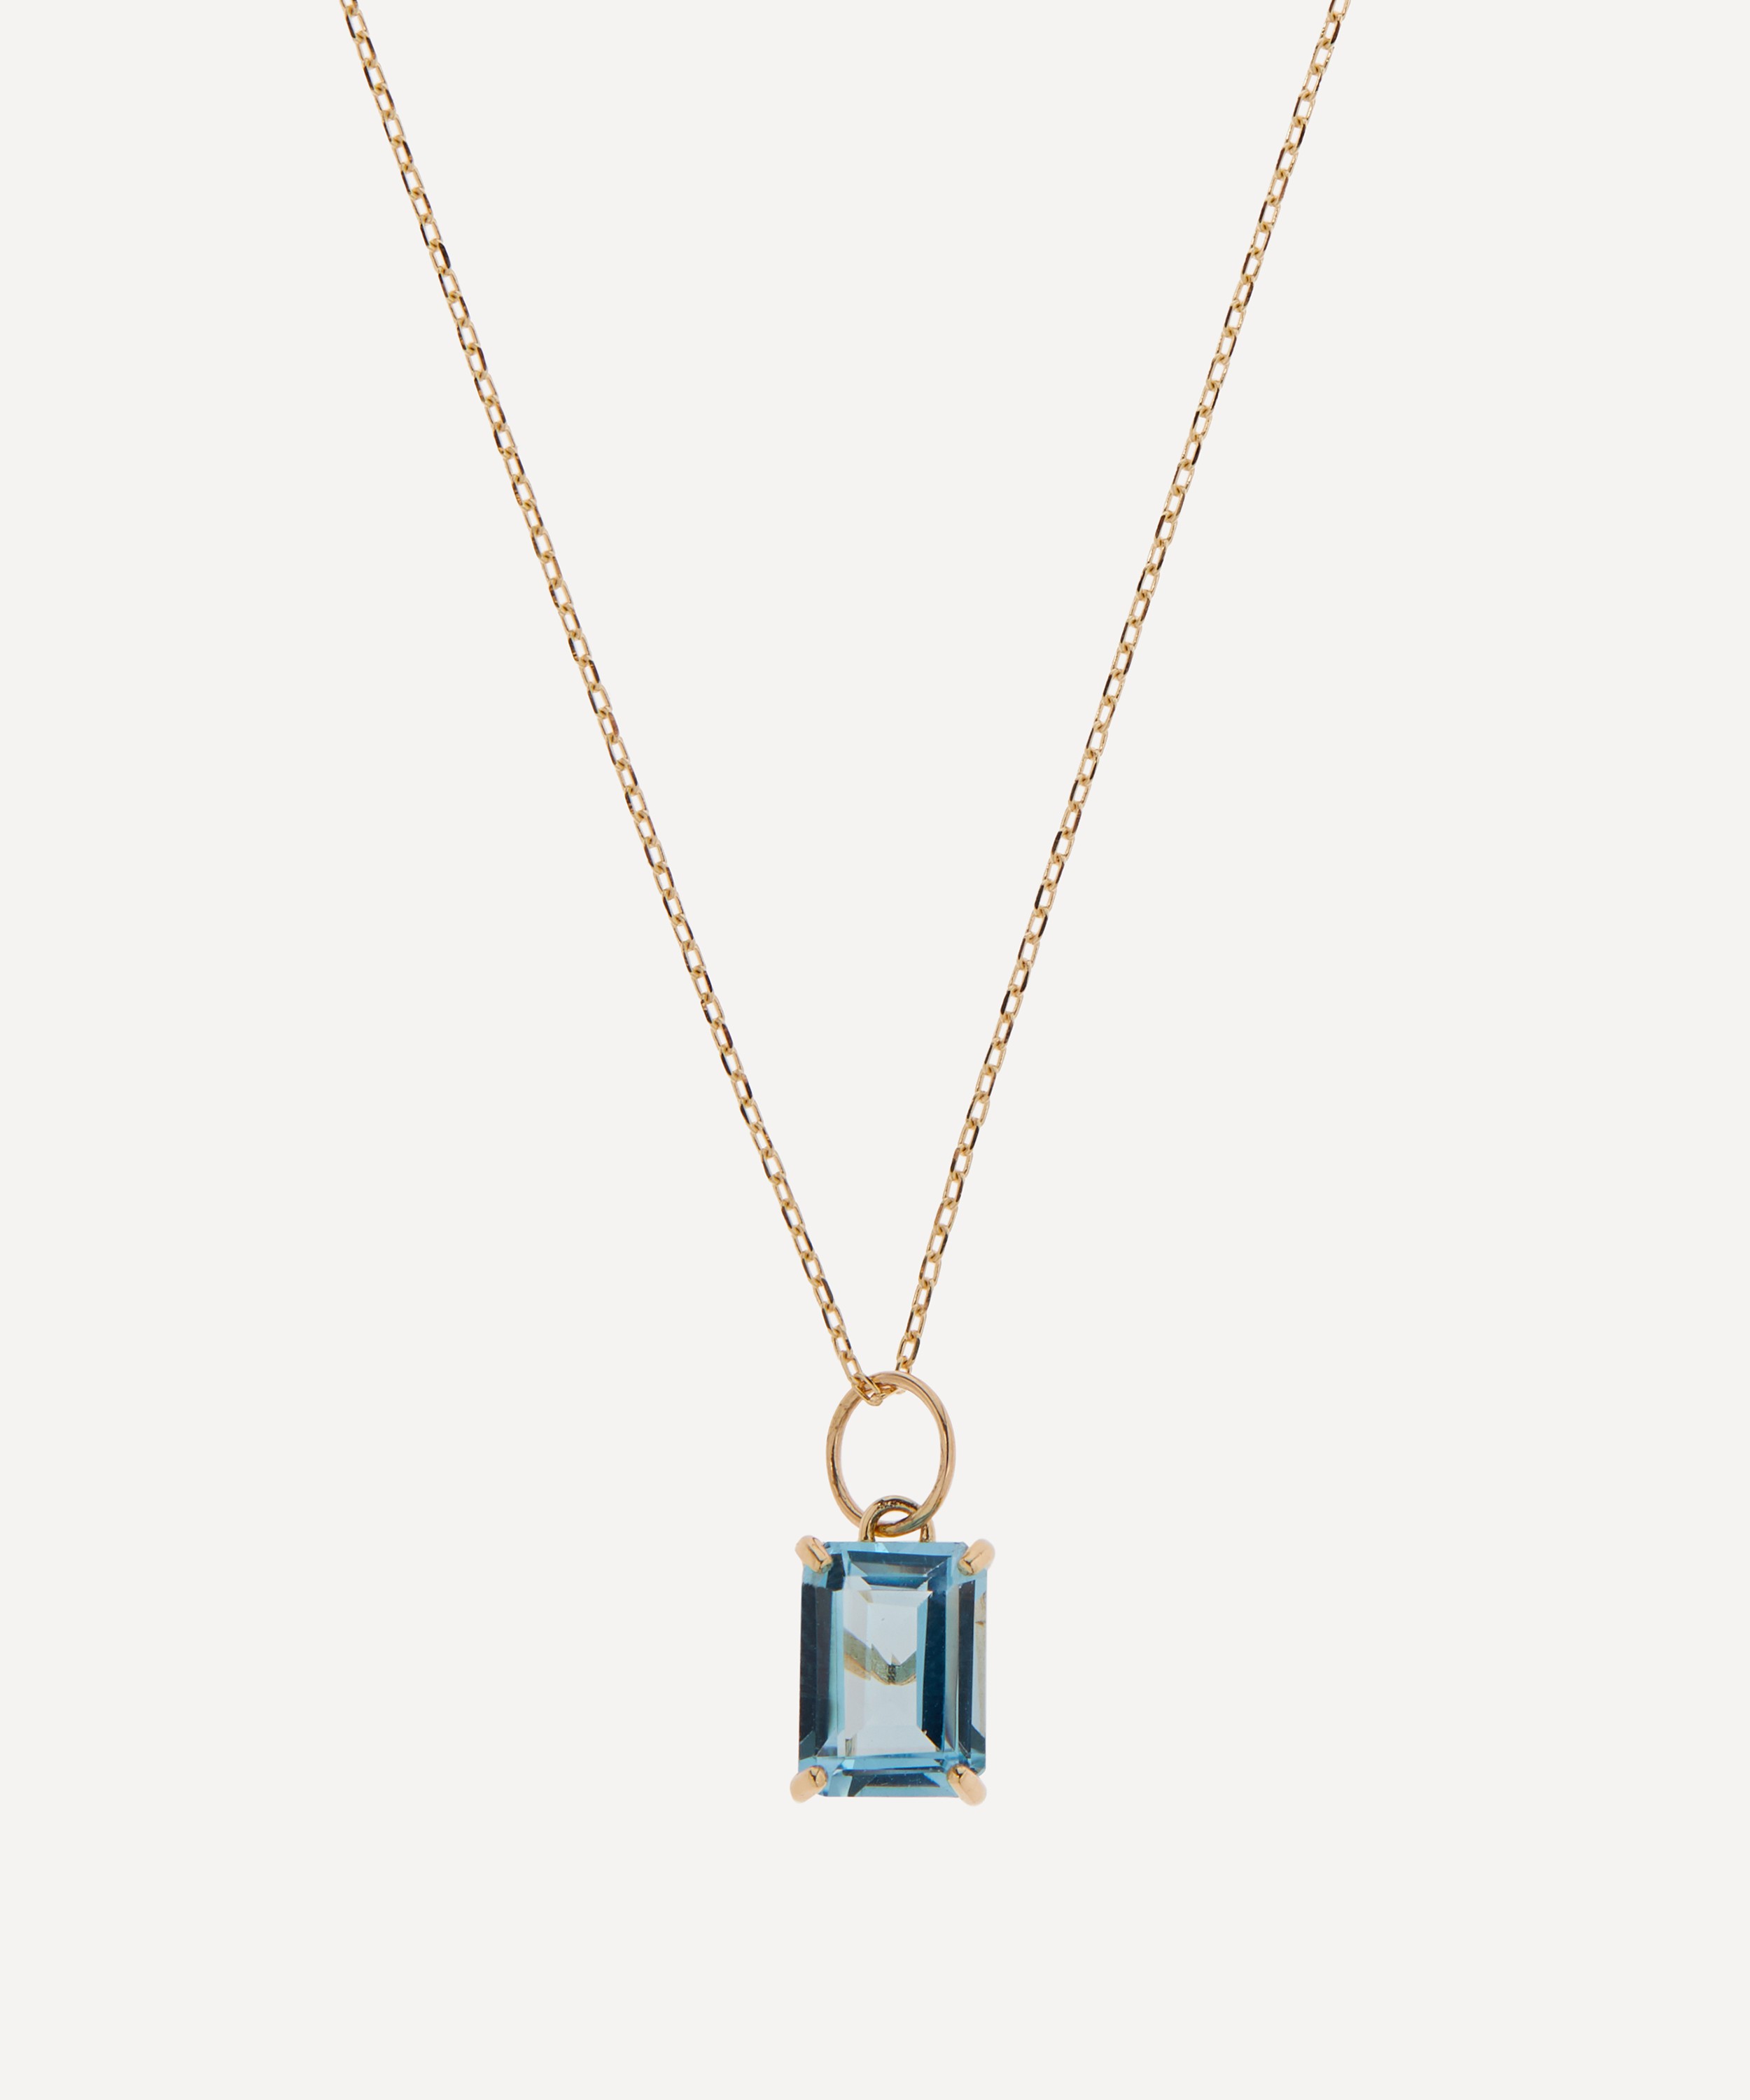 Mateo - 14ct Gold Emerald Cut Blue Topaz Pendant Necklace